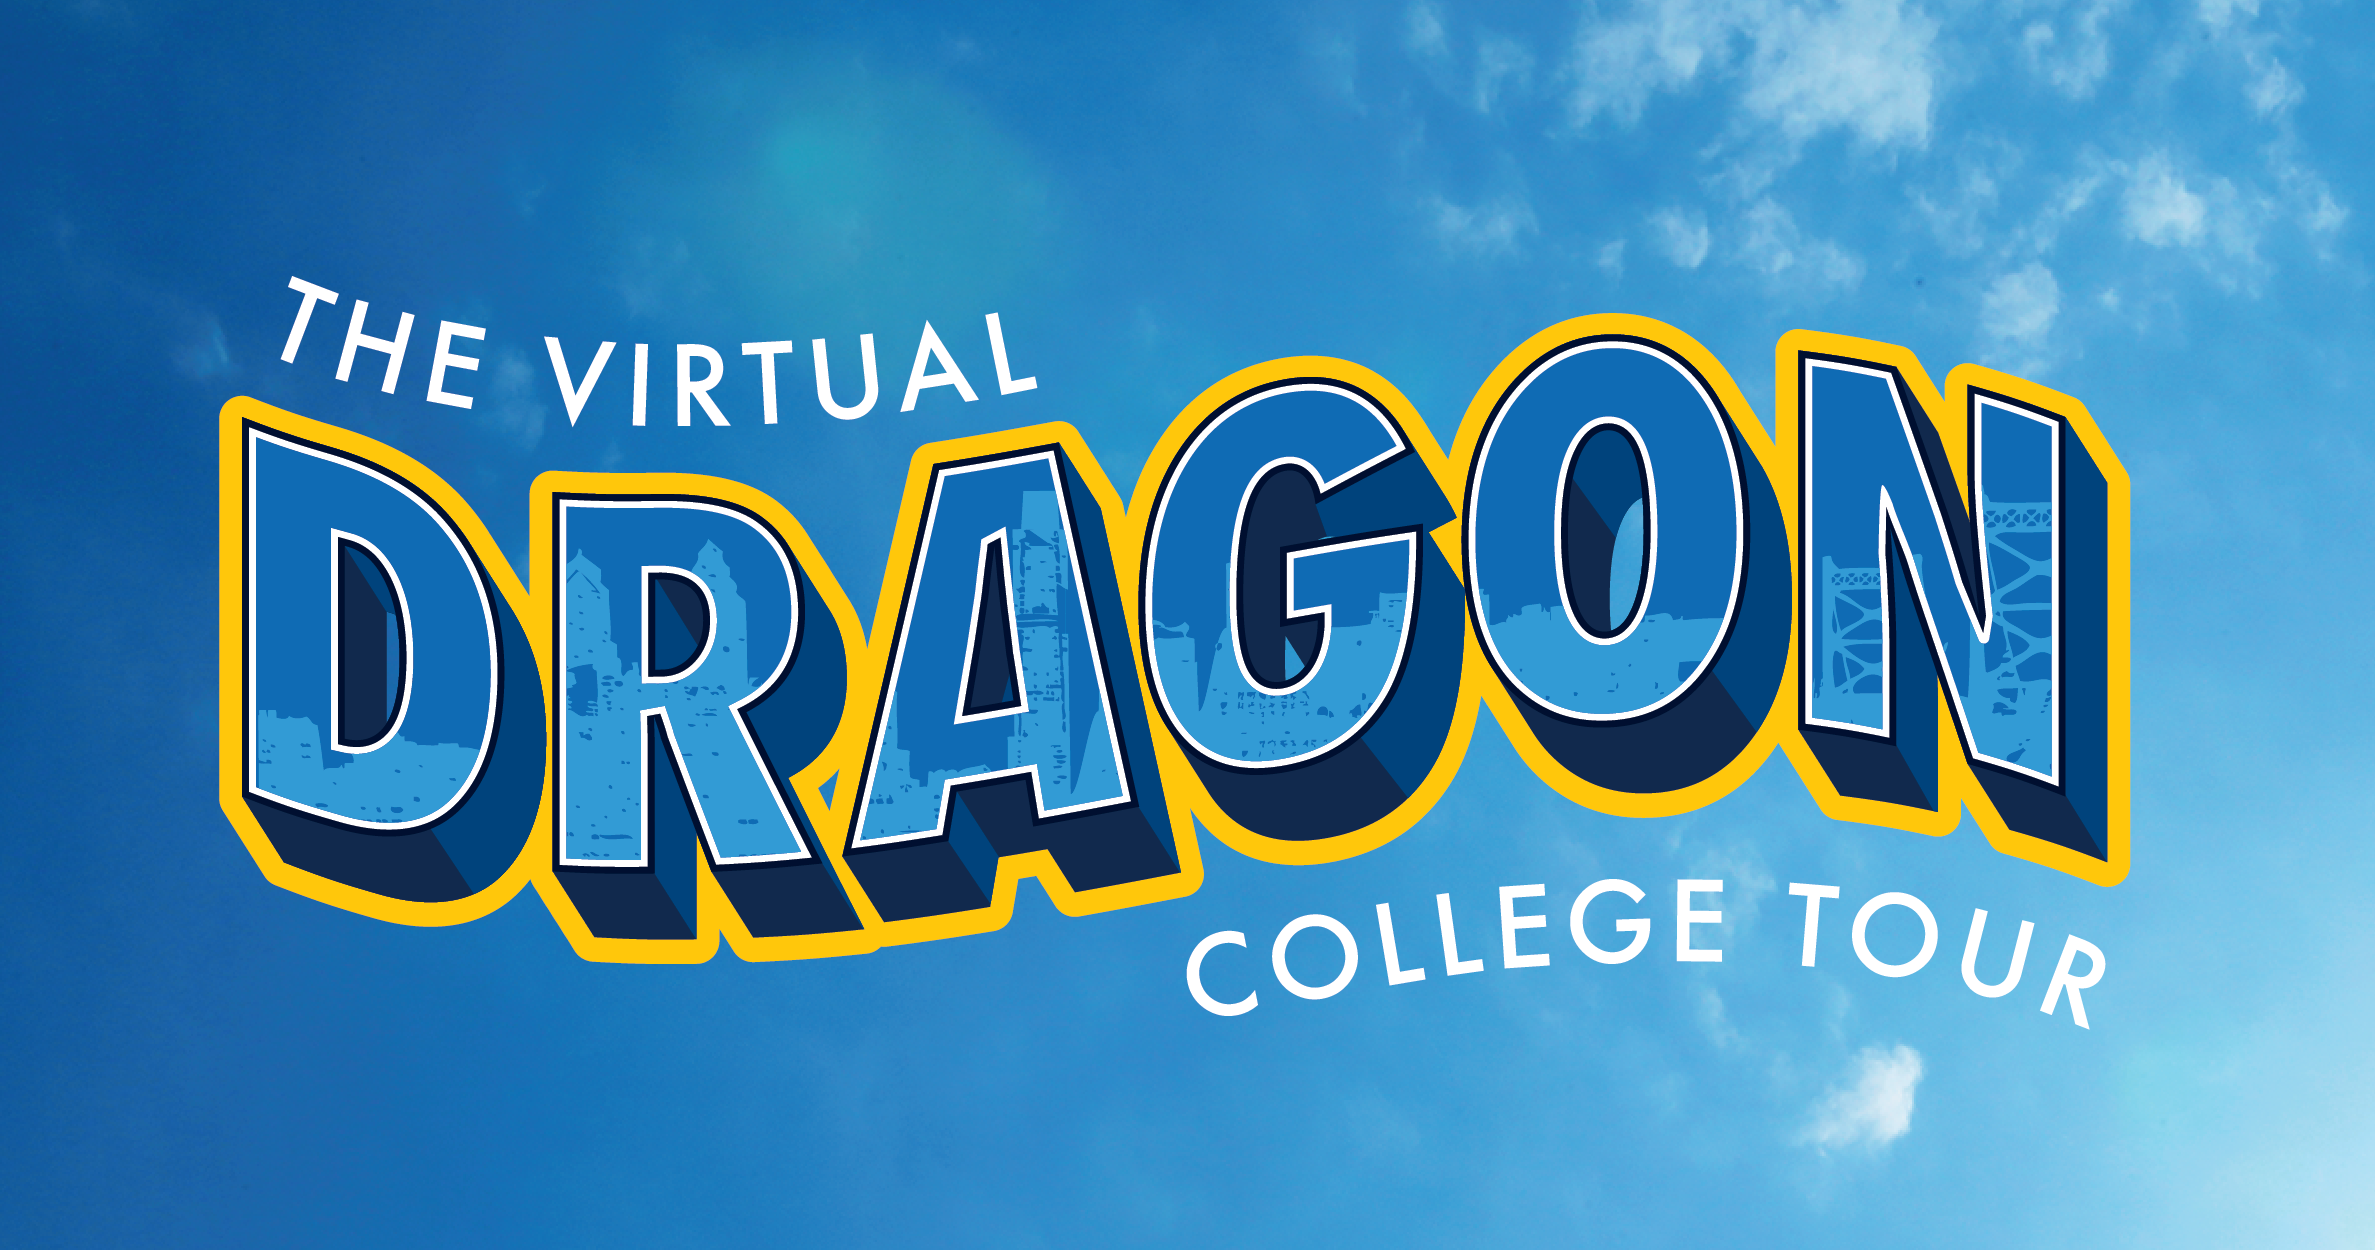 The Virtual Dragon College Tour